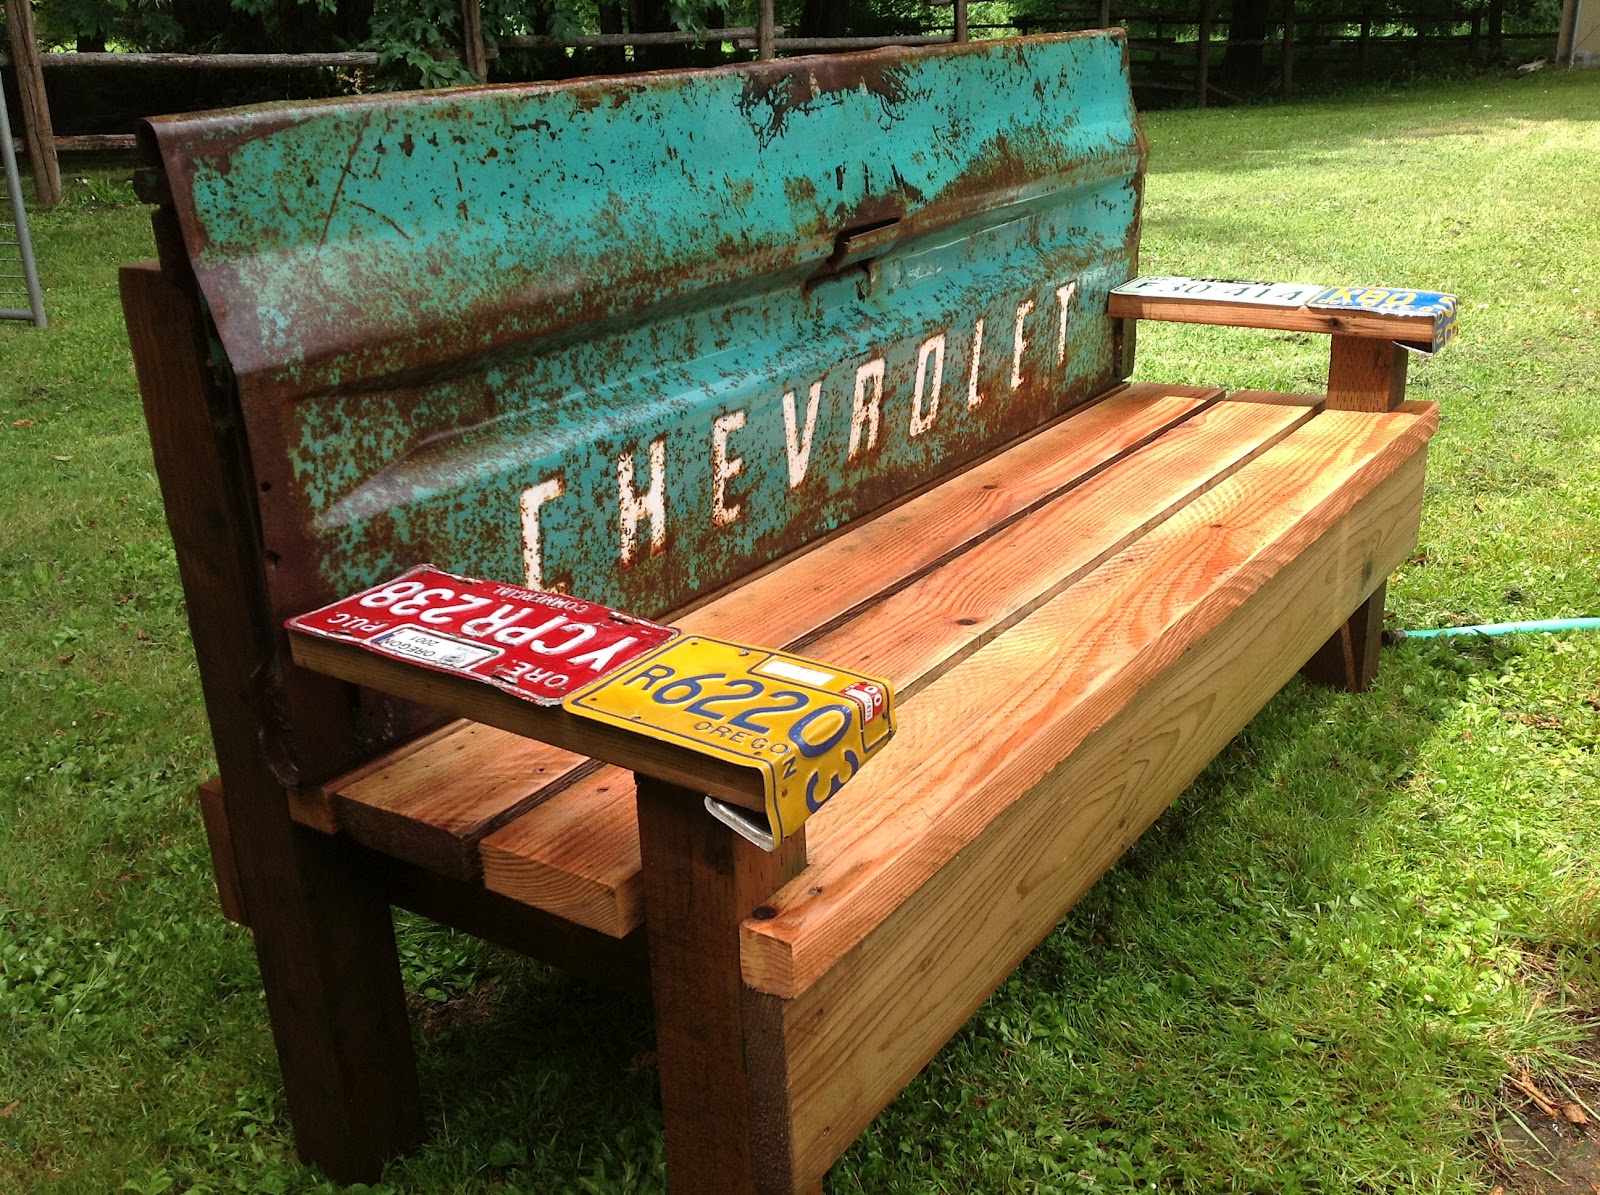 Kathi's Garden Art Rust-n-Stuff: Team building - Garden Bench with an 